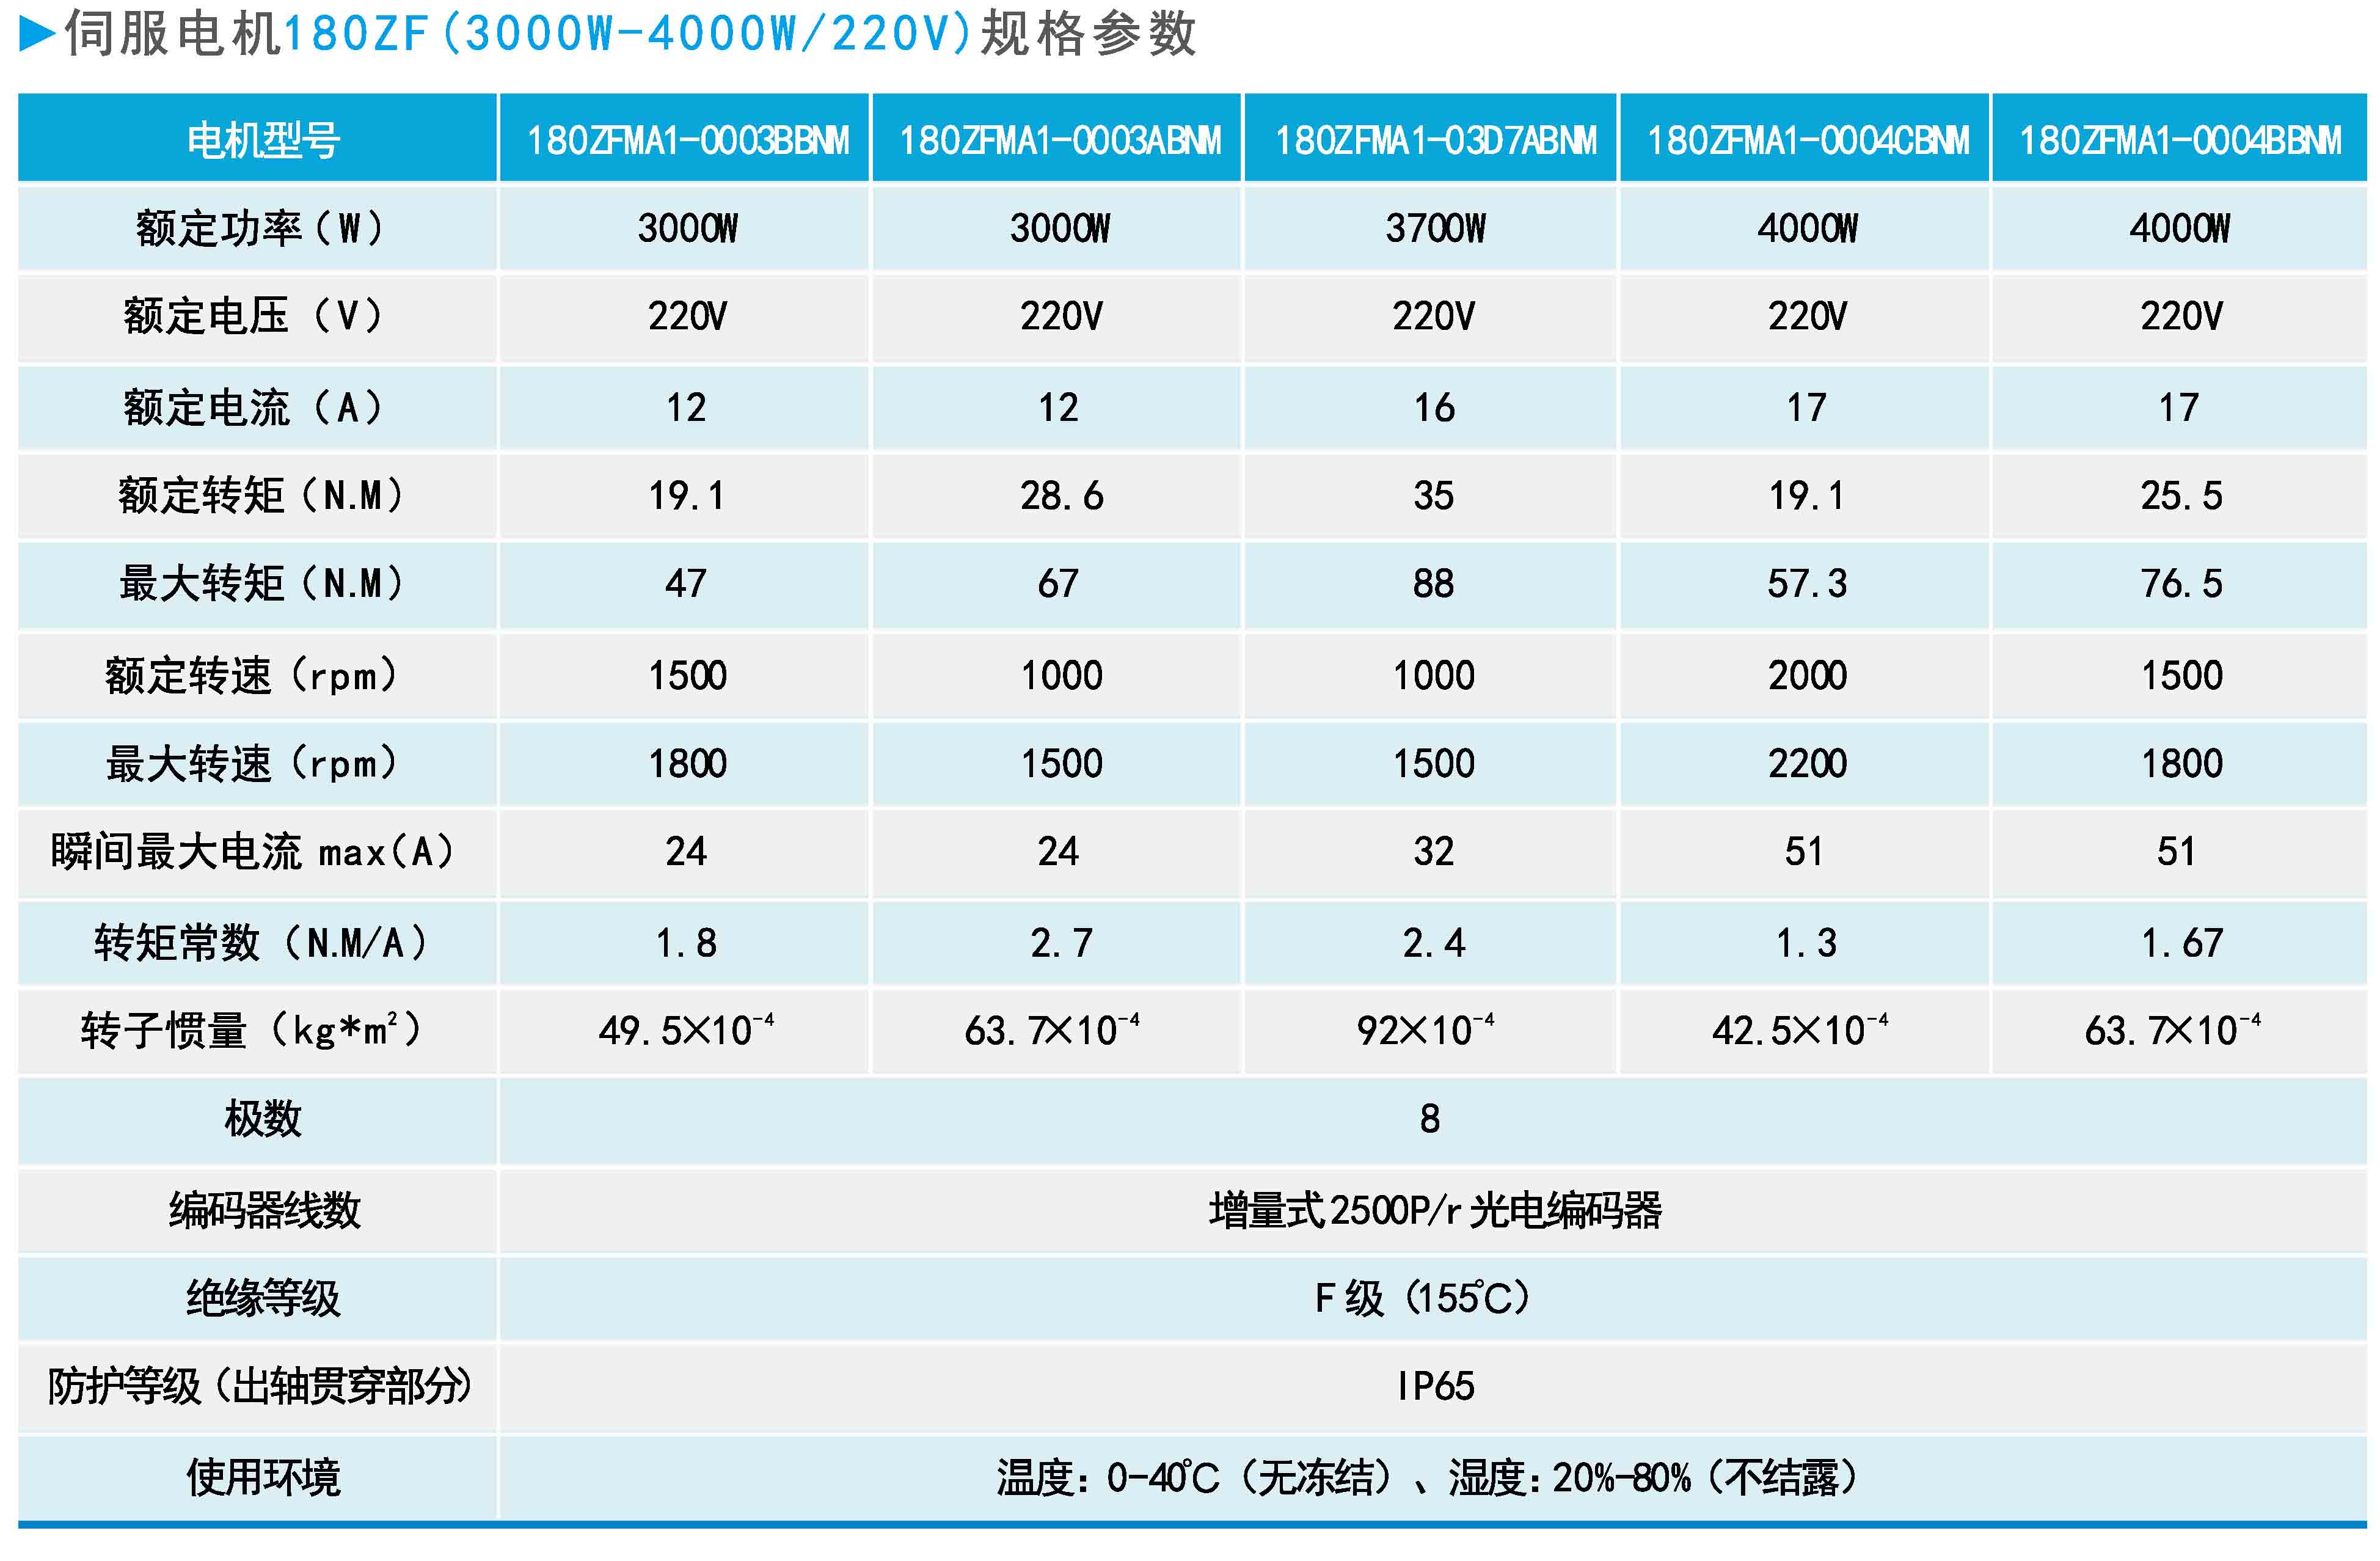 ZF180(3000W-4000W 220V)系列通用型伺服电机规格参数.JPG